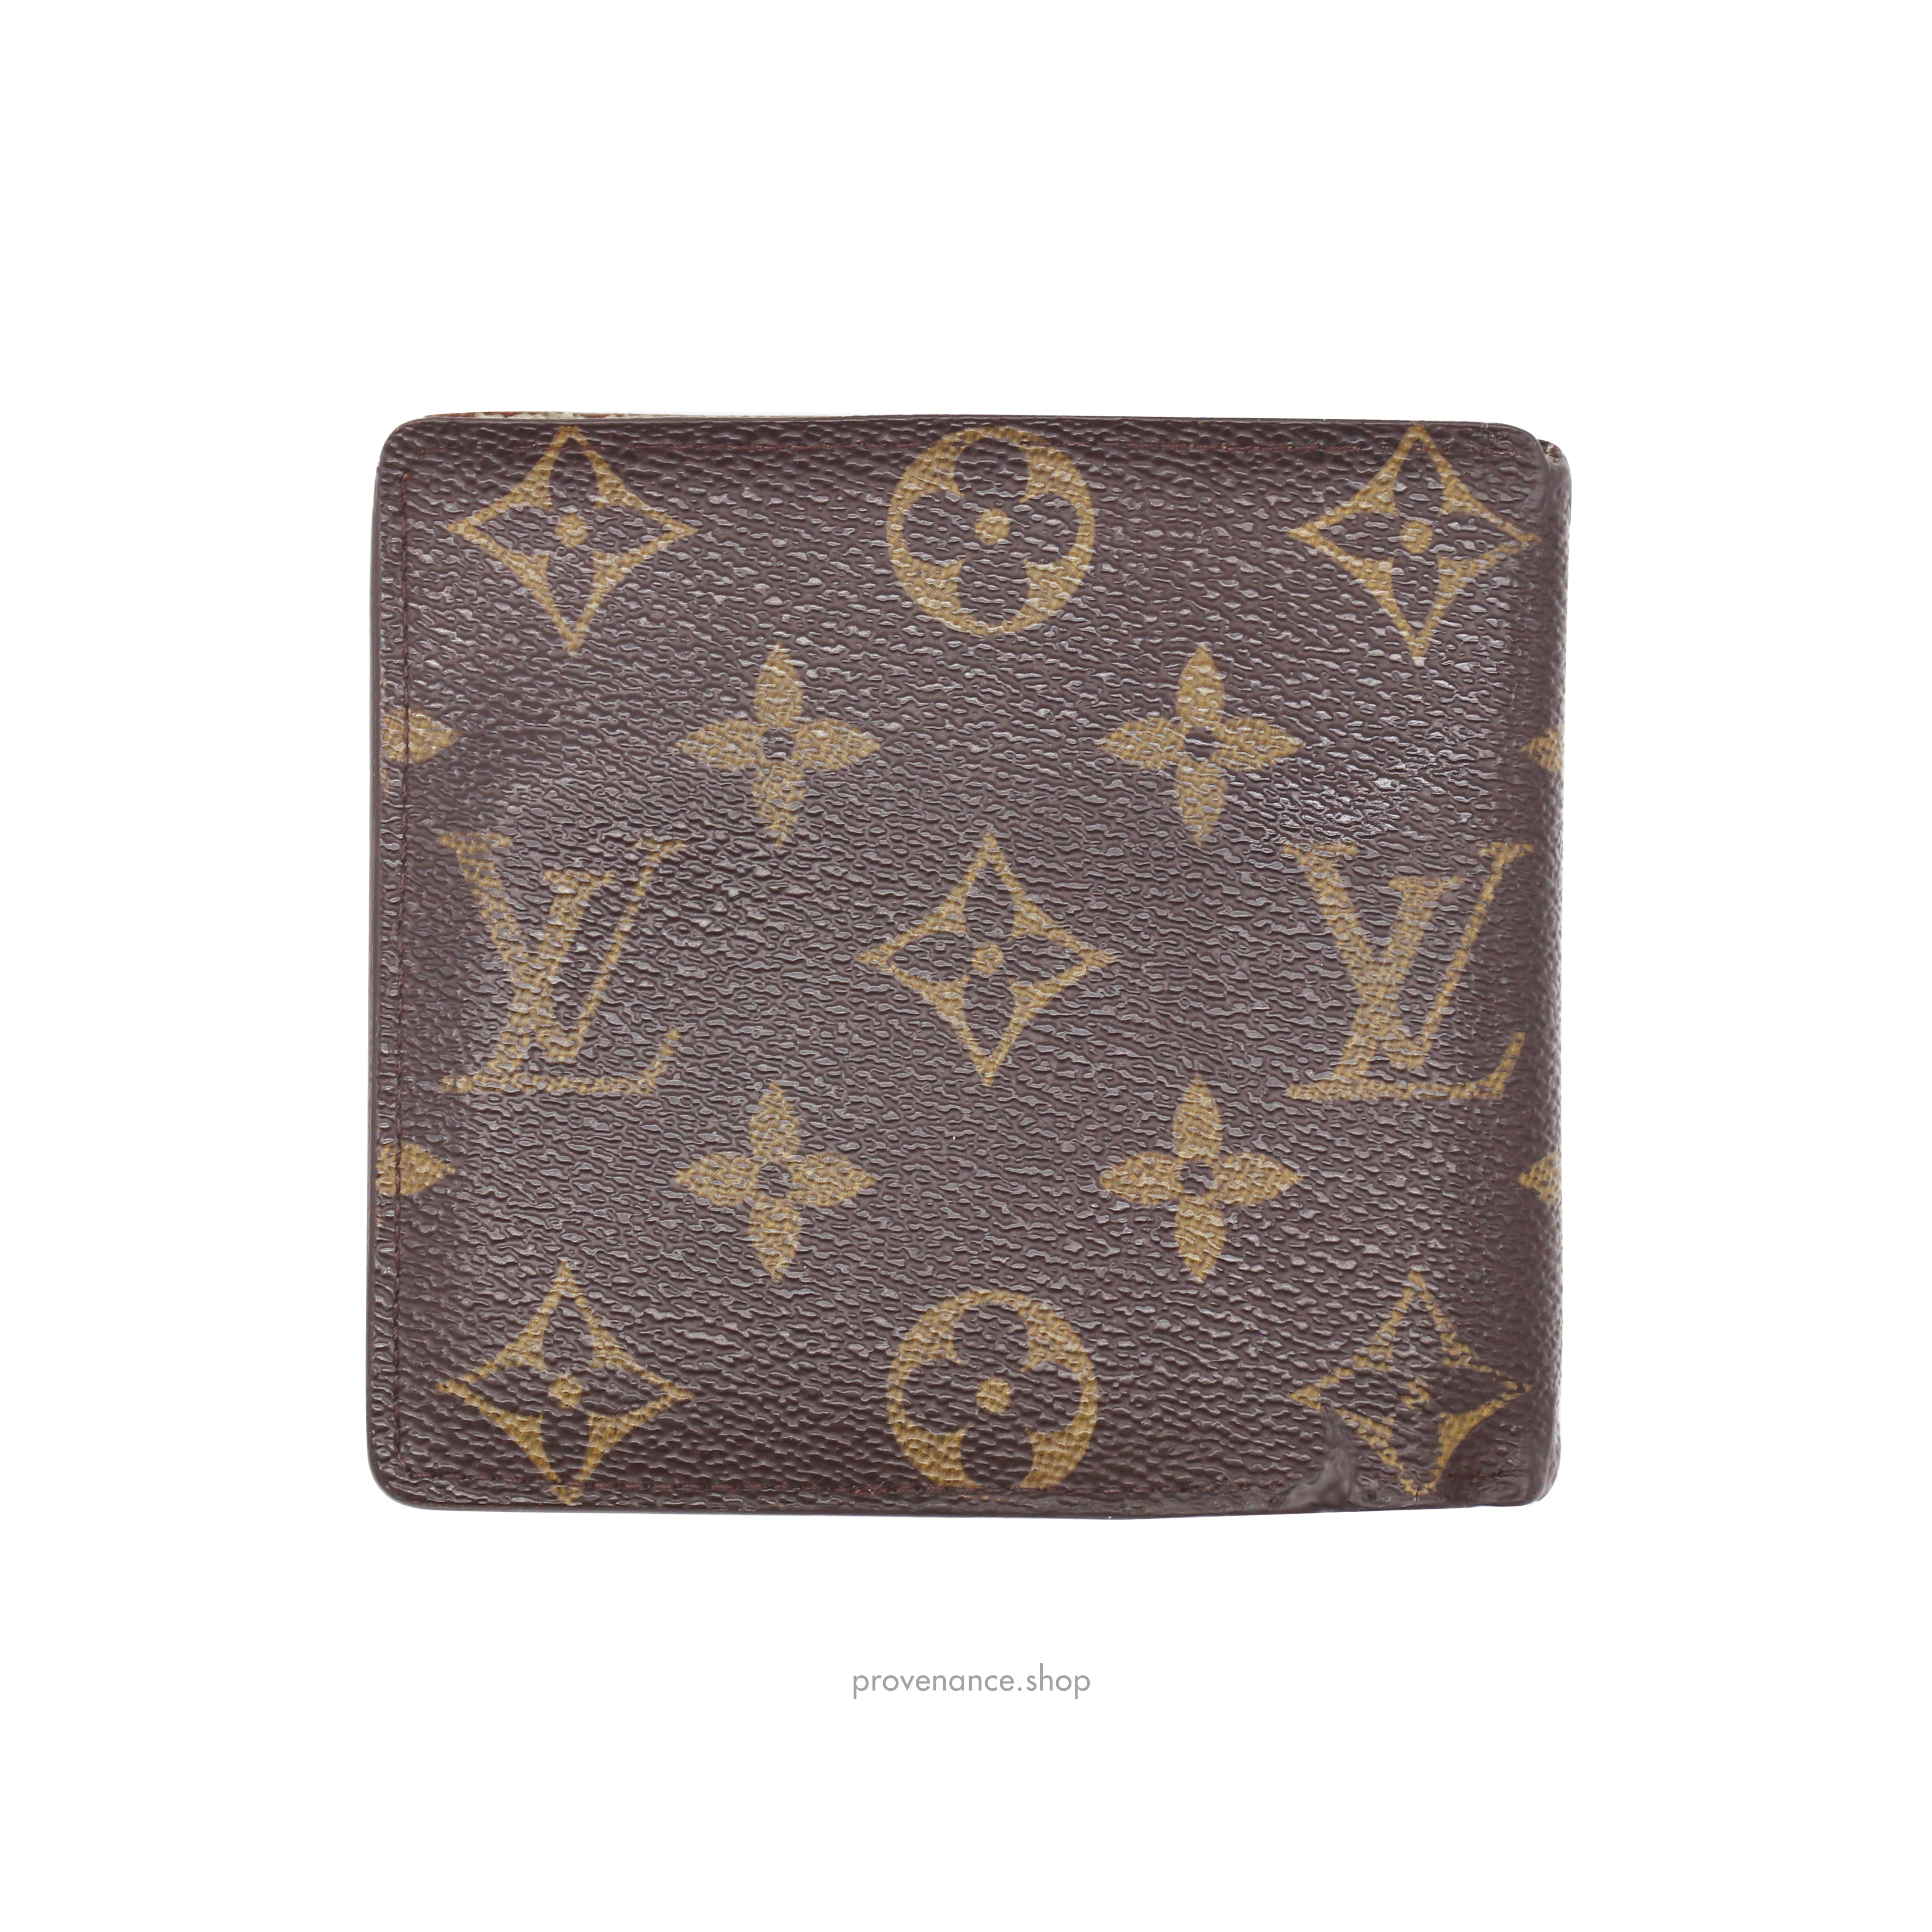 Louis Vuitton Bifold Wallet, Monogram